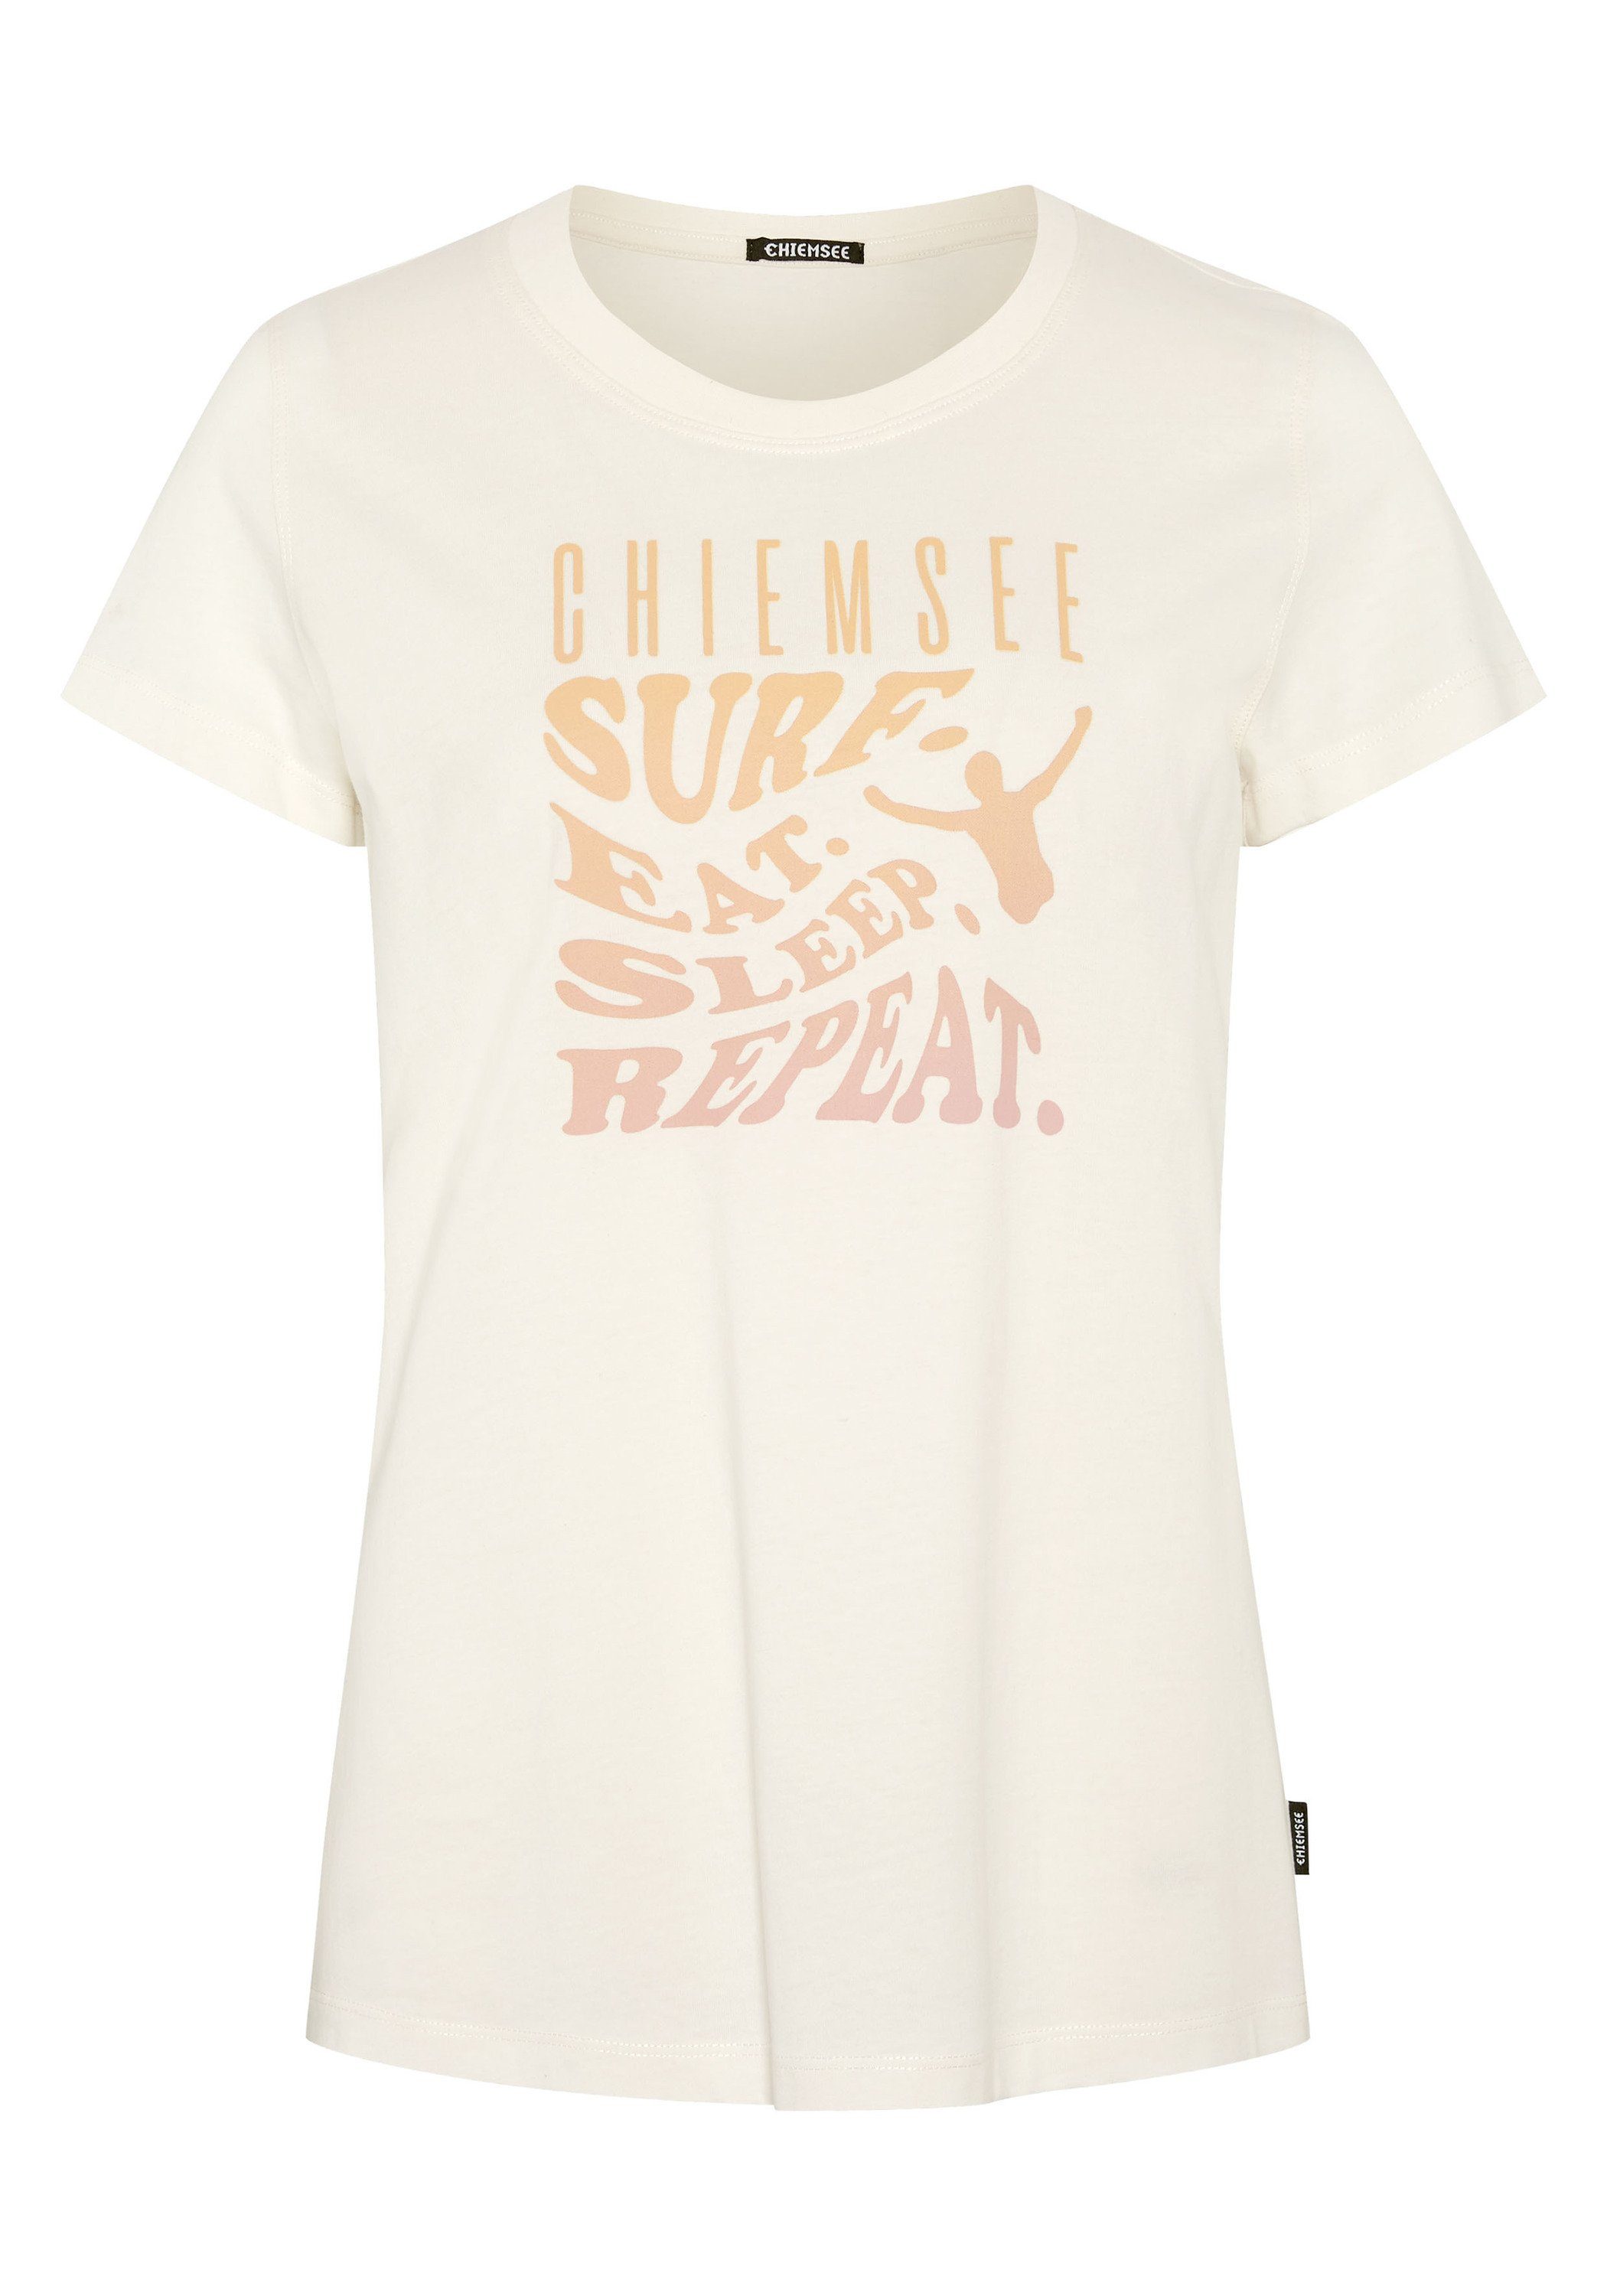 Chiemsee Print-Shirt T-Shirt mit Schriftzug 1 11-4202 Star White